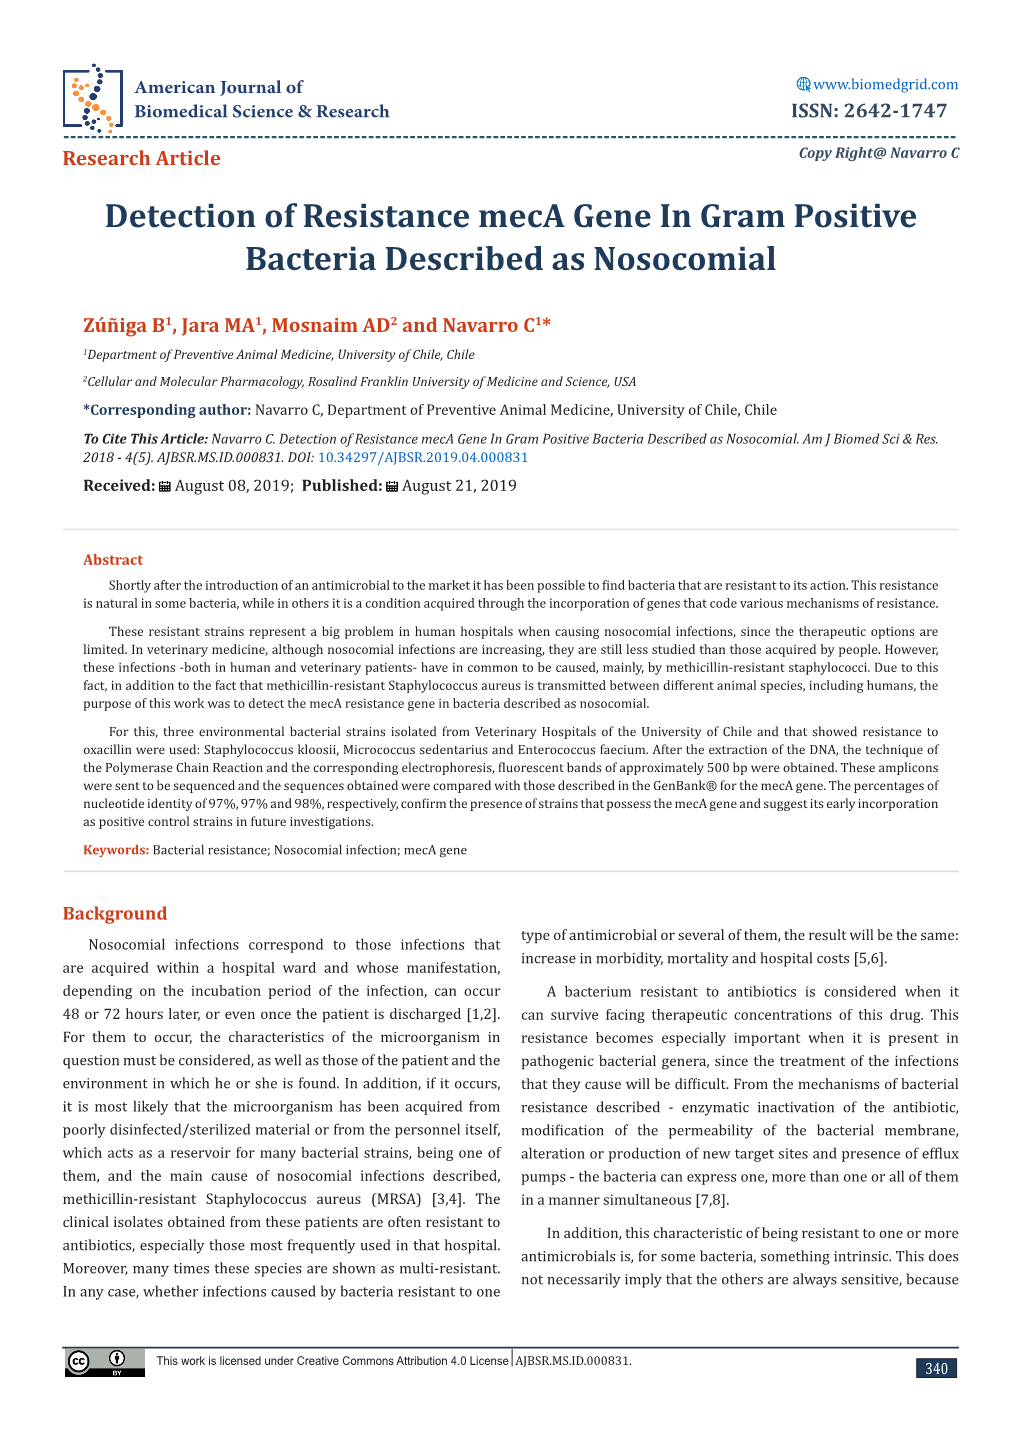 Detection of Resistance Meca Gene in Gram Positive Bacteria Described As Nosocomial